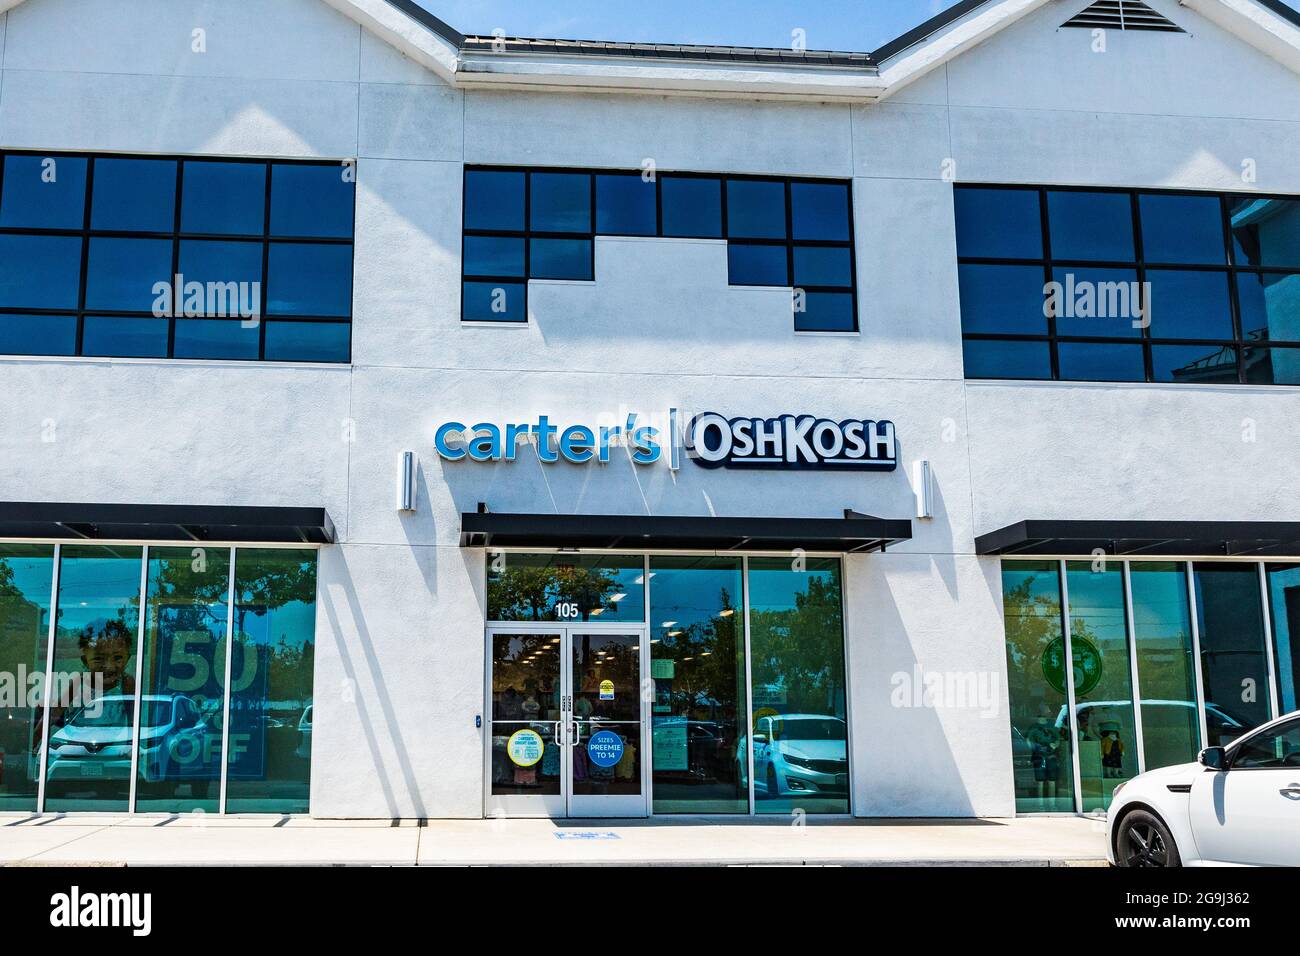 A Carter's Oshkosh childrens clothing store the Arden Arcade area of  Sacramento California USA Stock Photo - Alamy